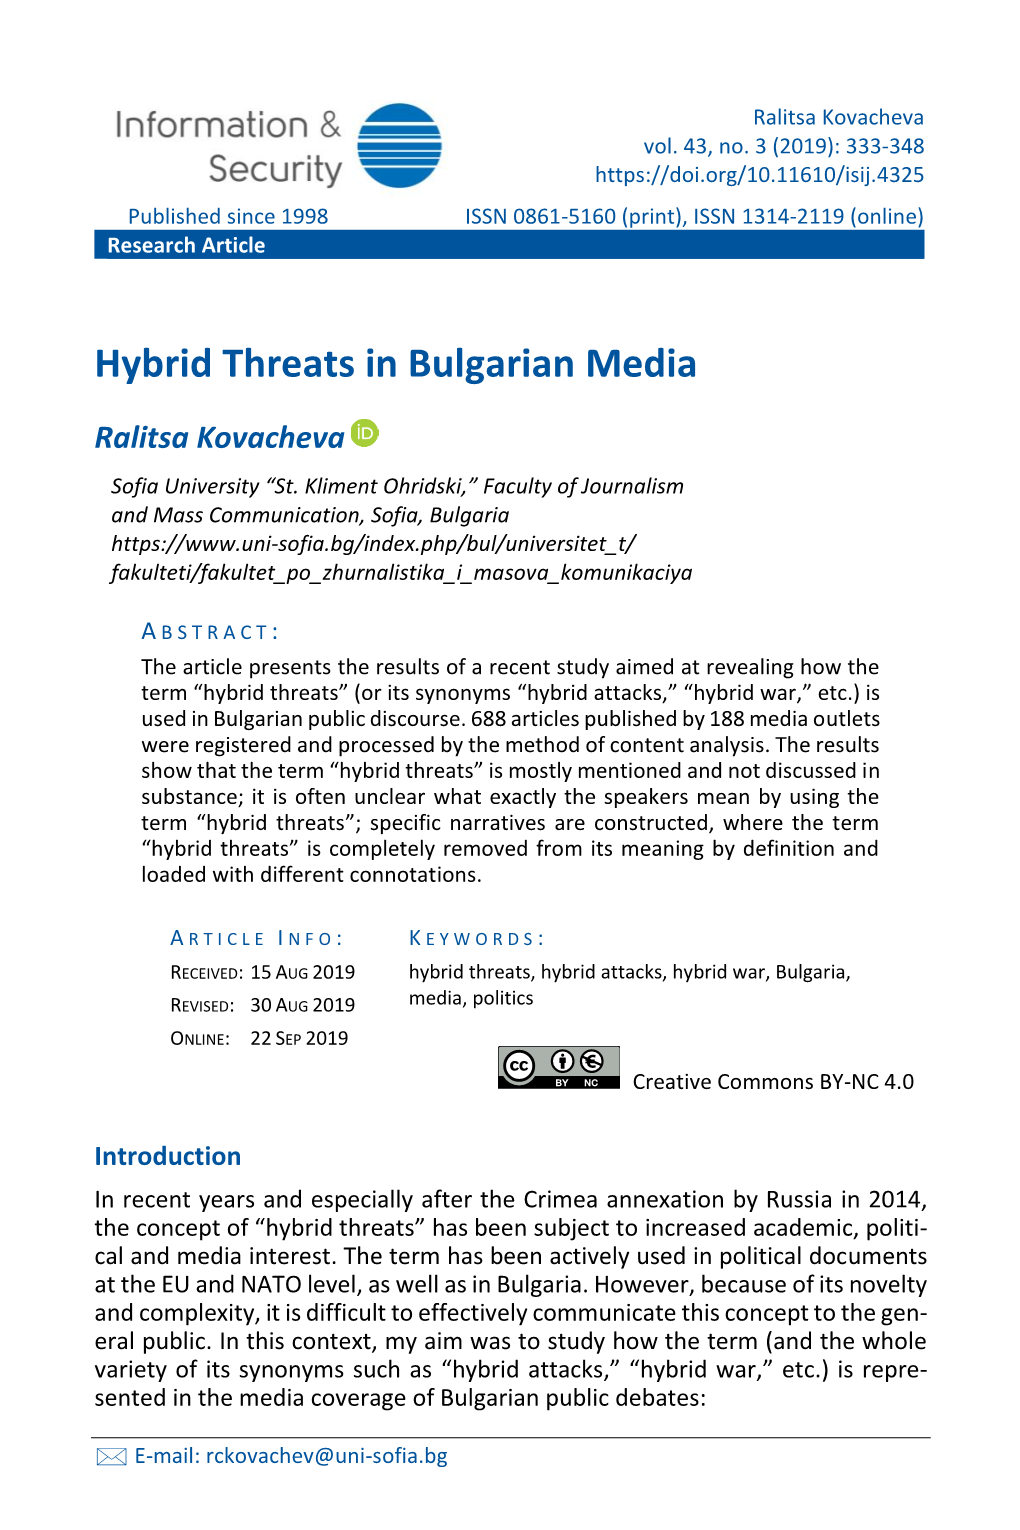 Hybrid Threats in Bulgarian Media